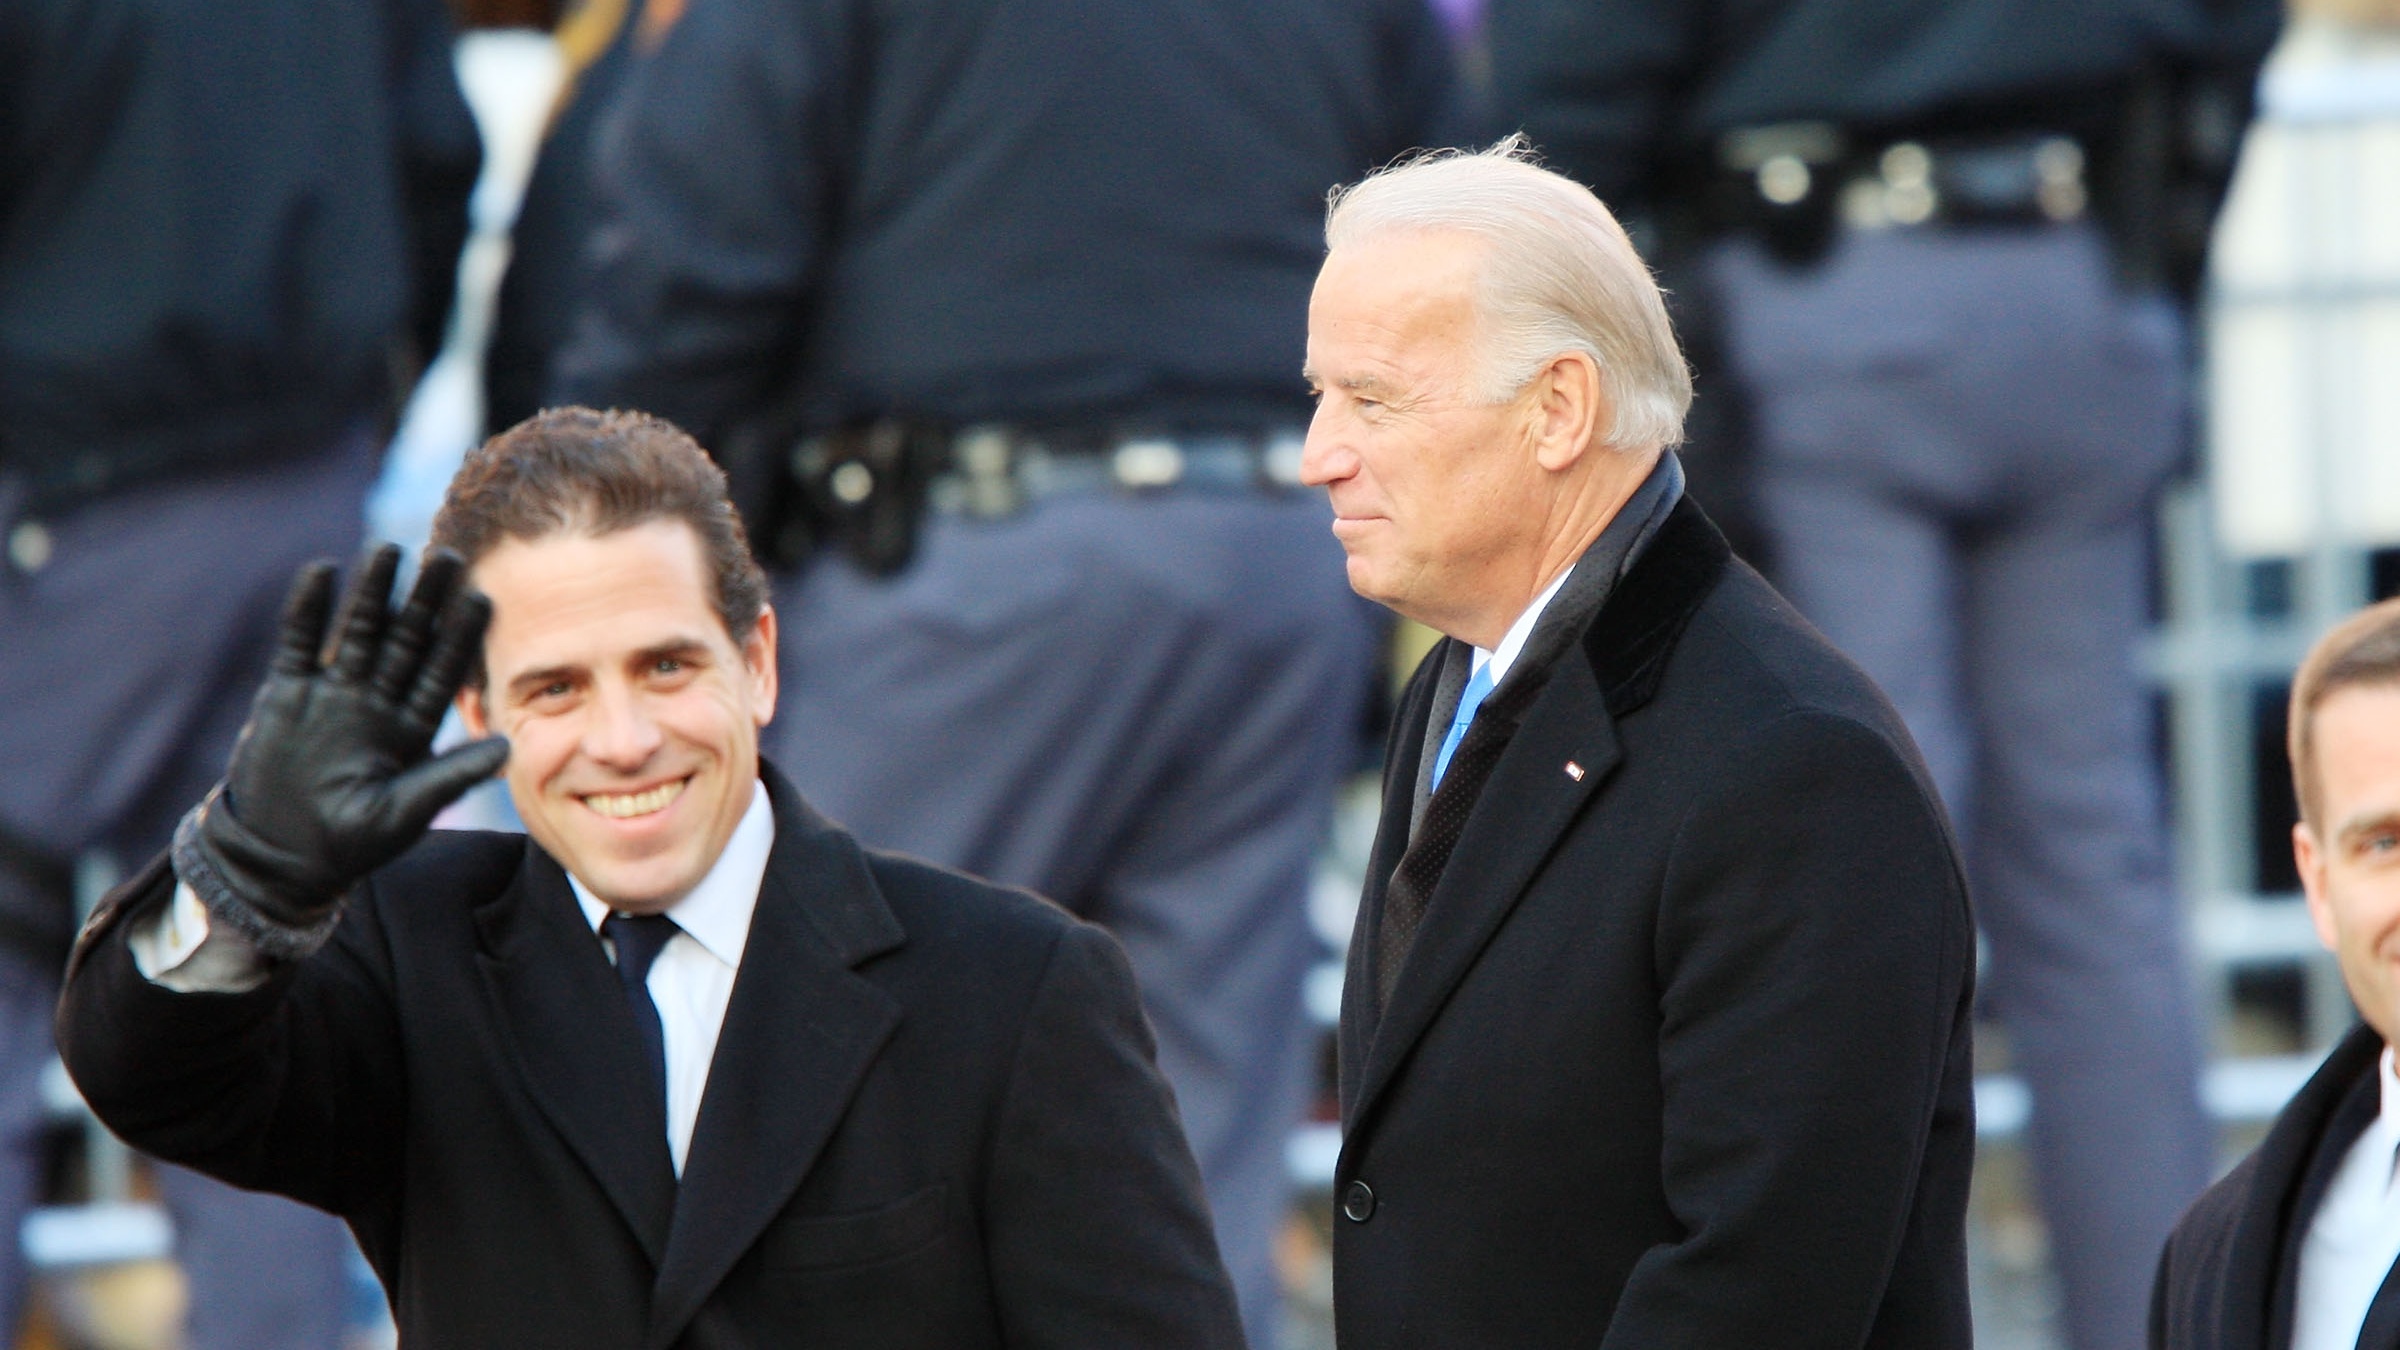 Hunter Biden and Joe Biden walking together.